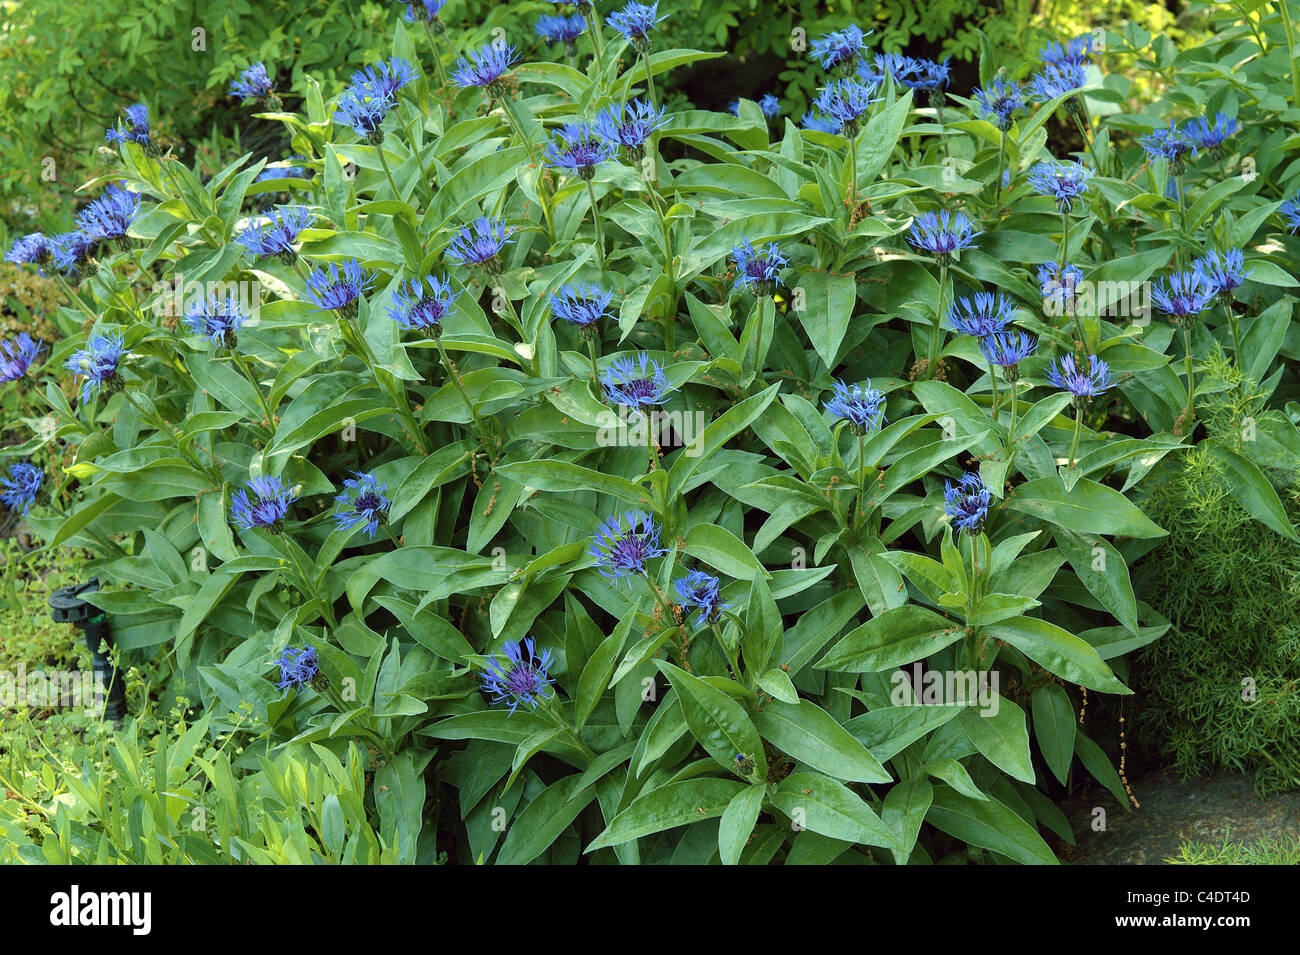 Blue cornflowers in full bloom Centaurea montana Stock Photo